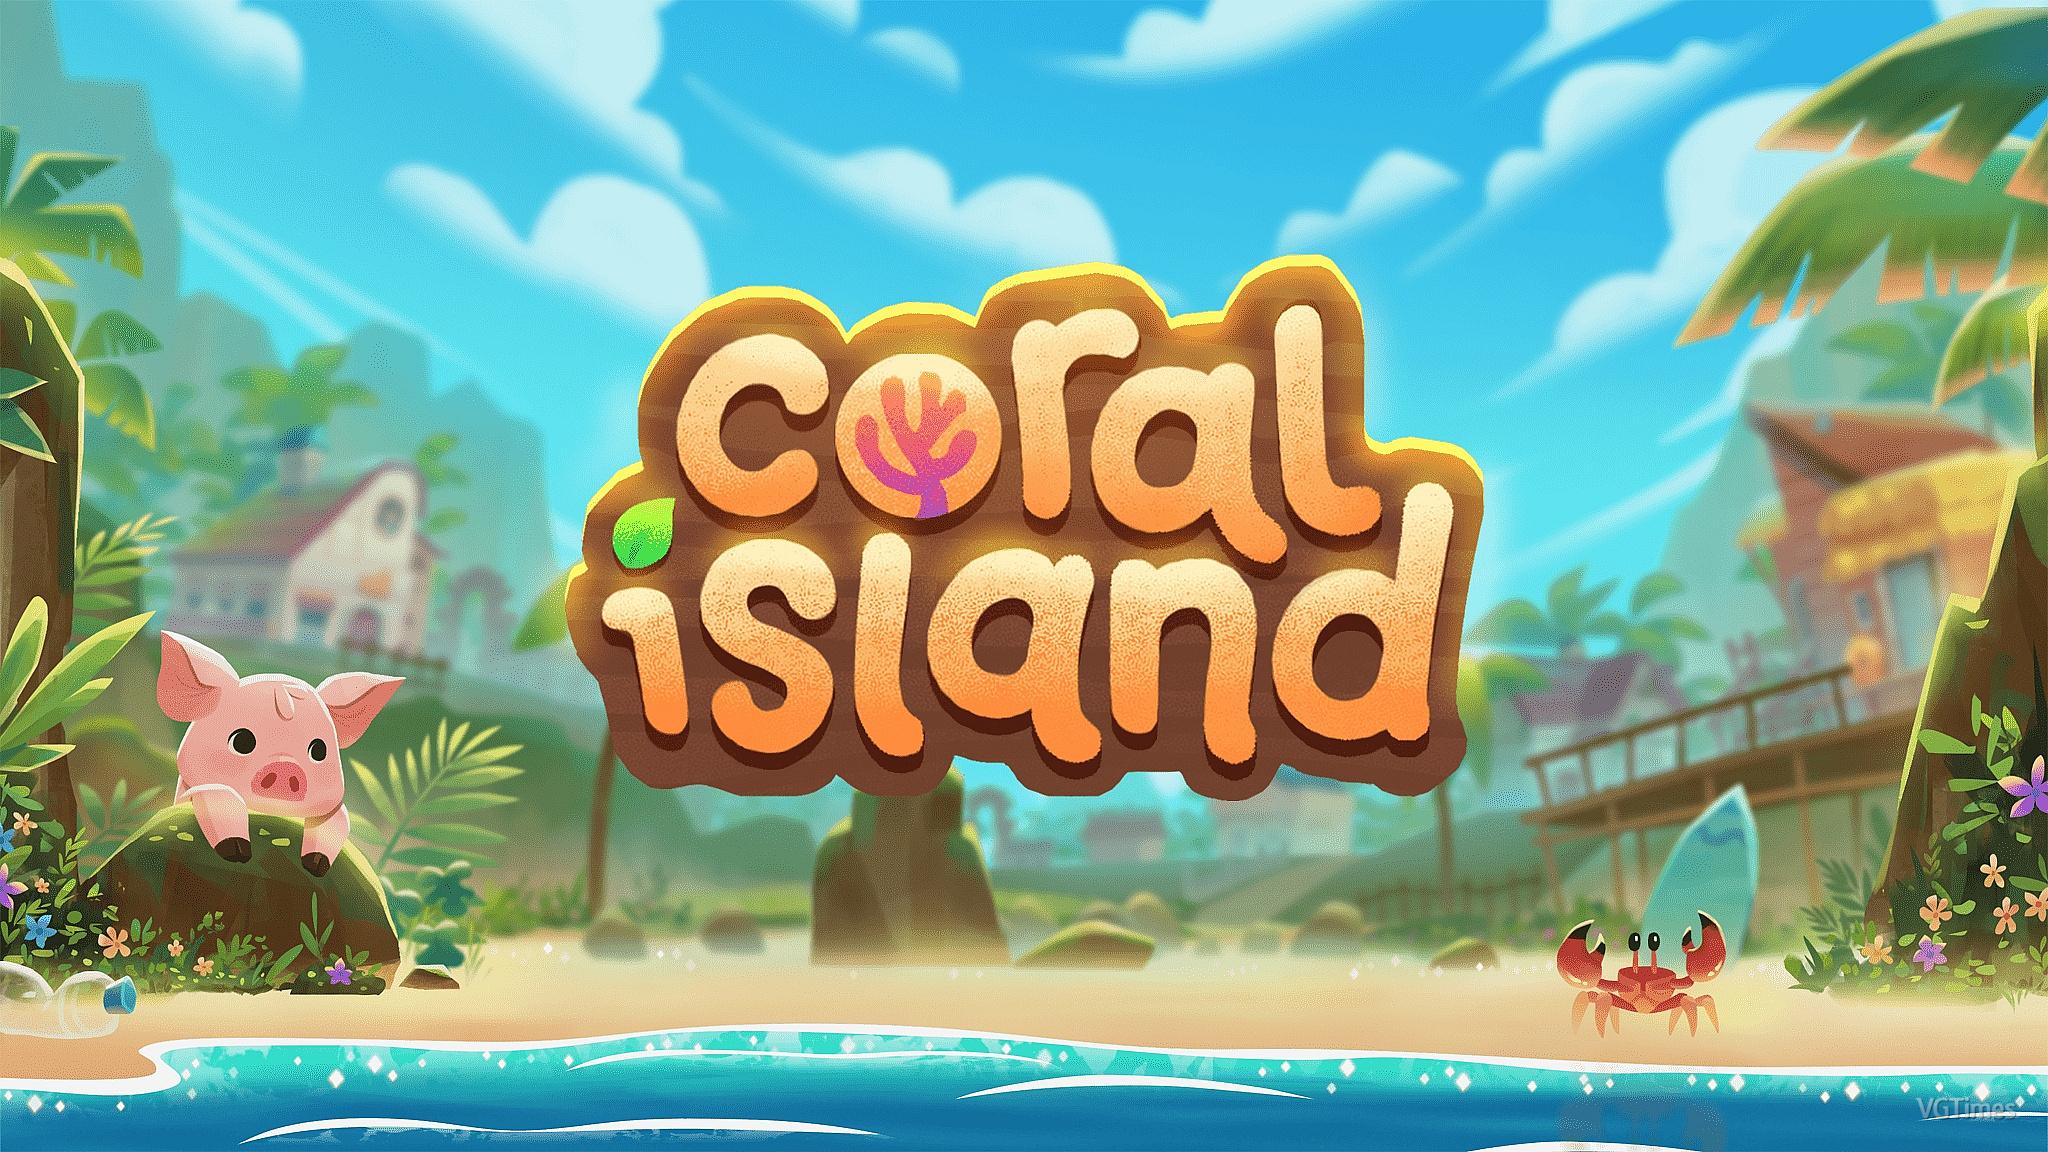 Coral island steam фото 42